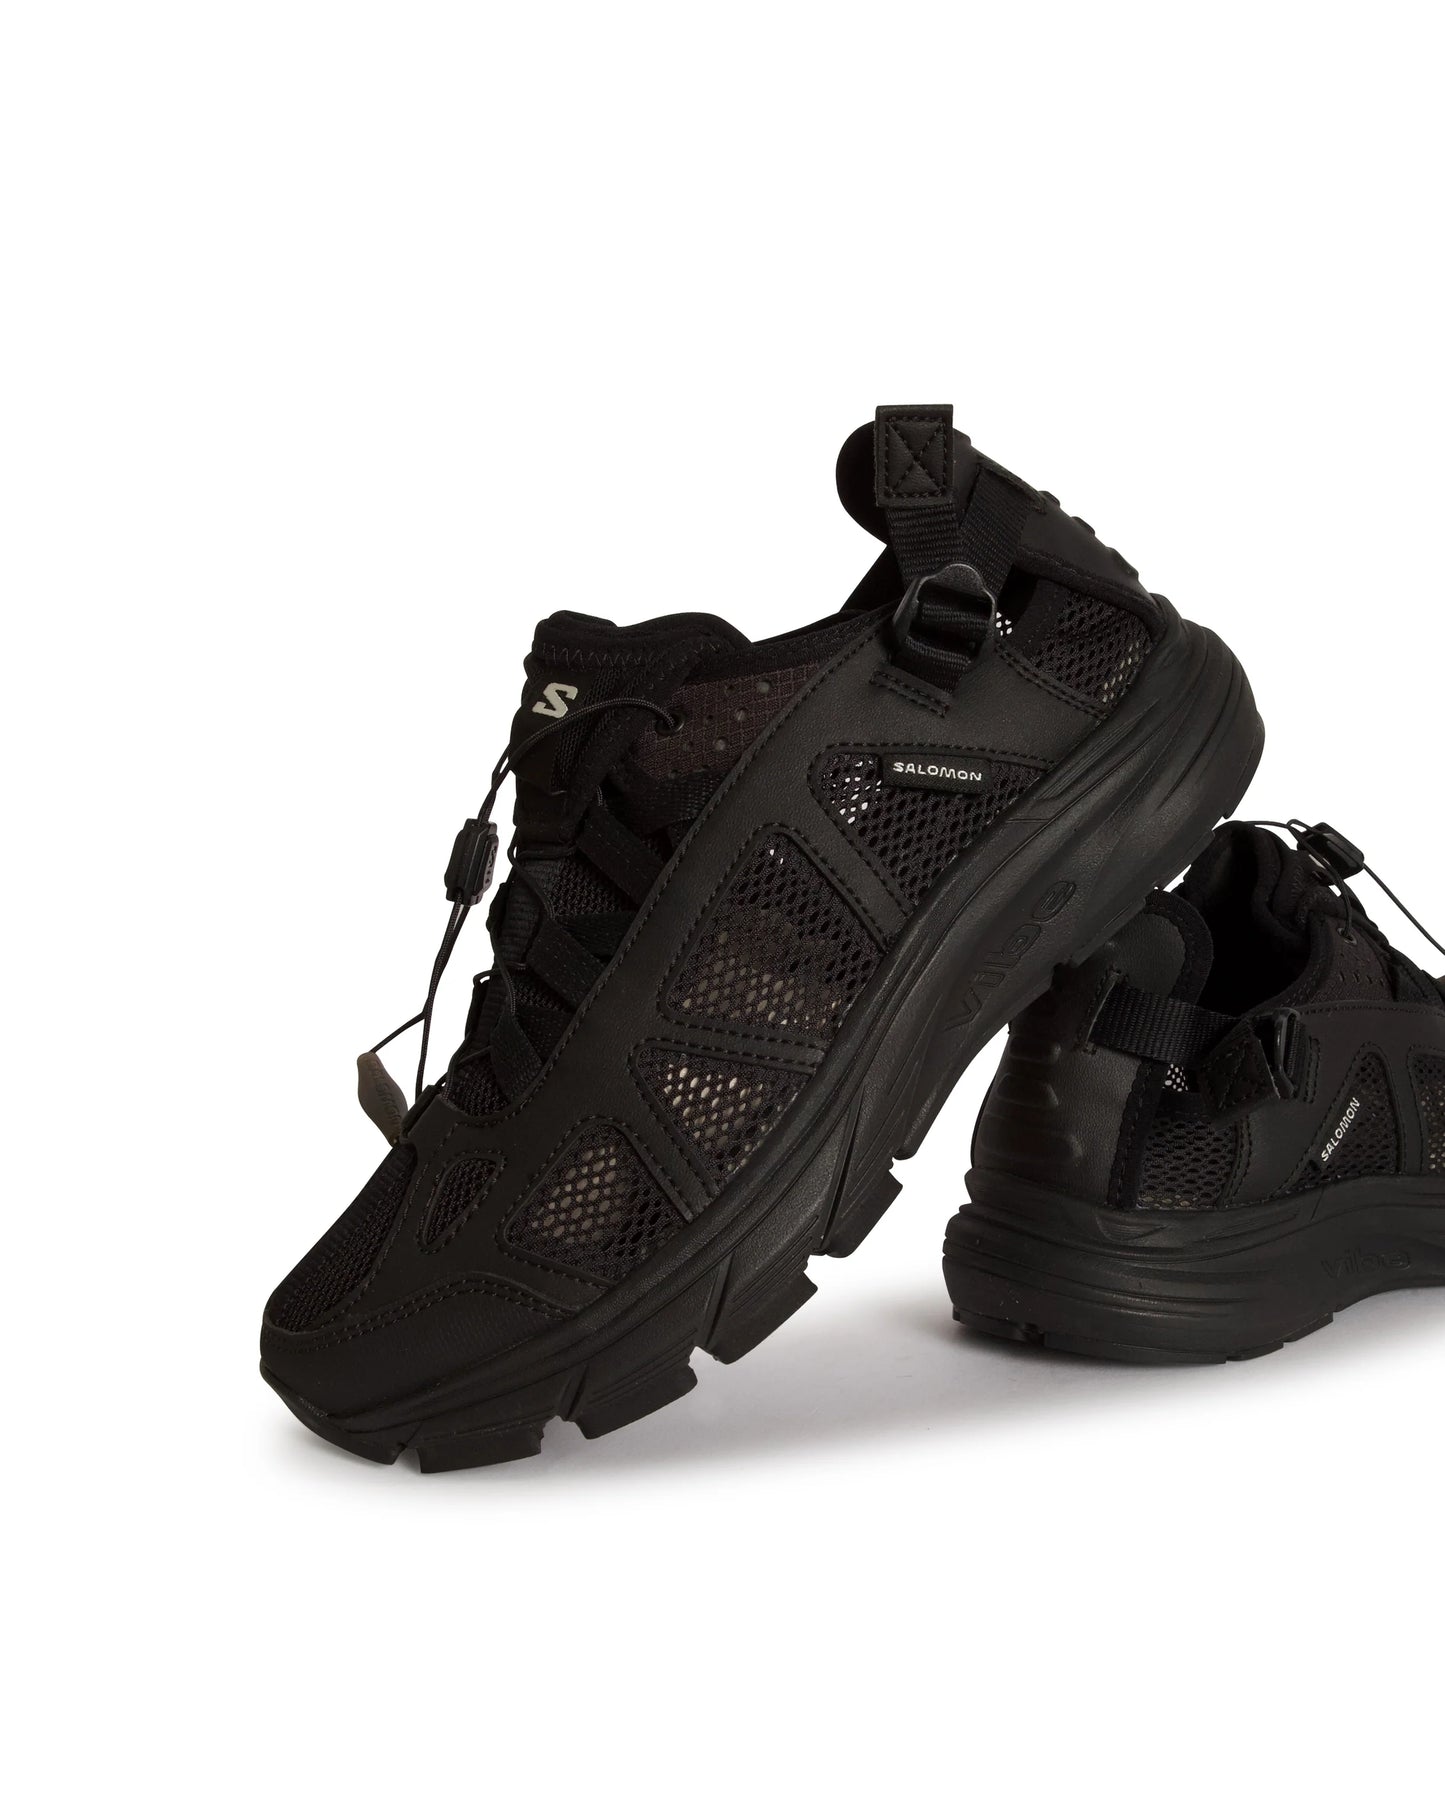 Salomon - Techsonic - Black - Chaussures unisexe